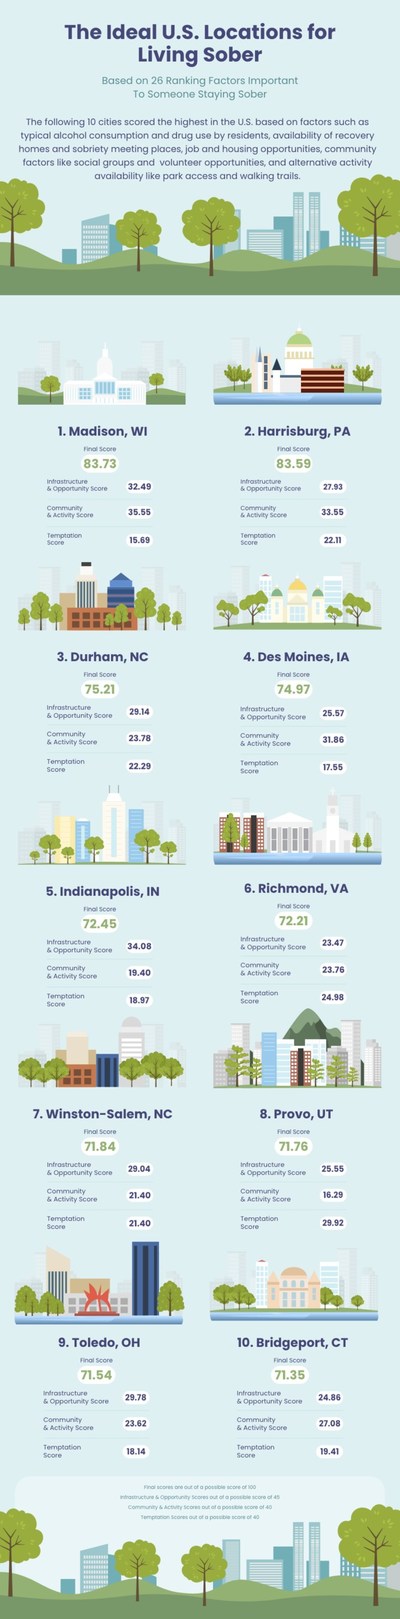 Top 10 Best Cities for Sober Living